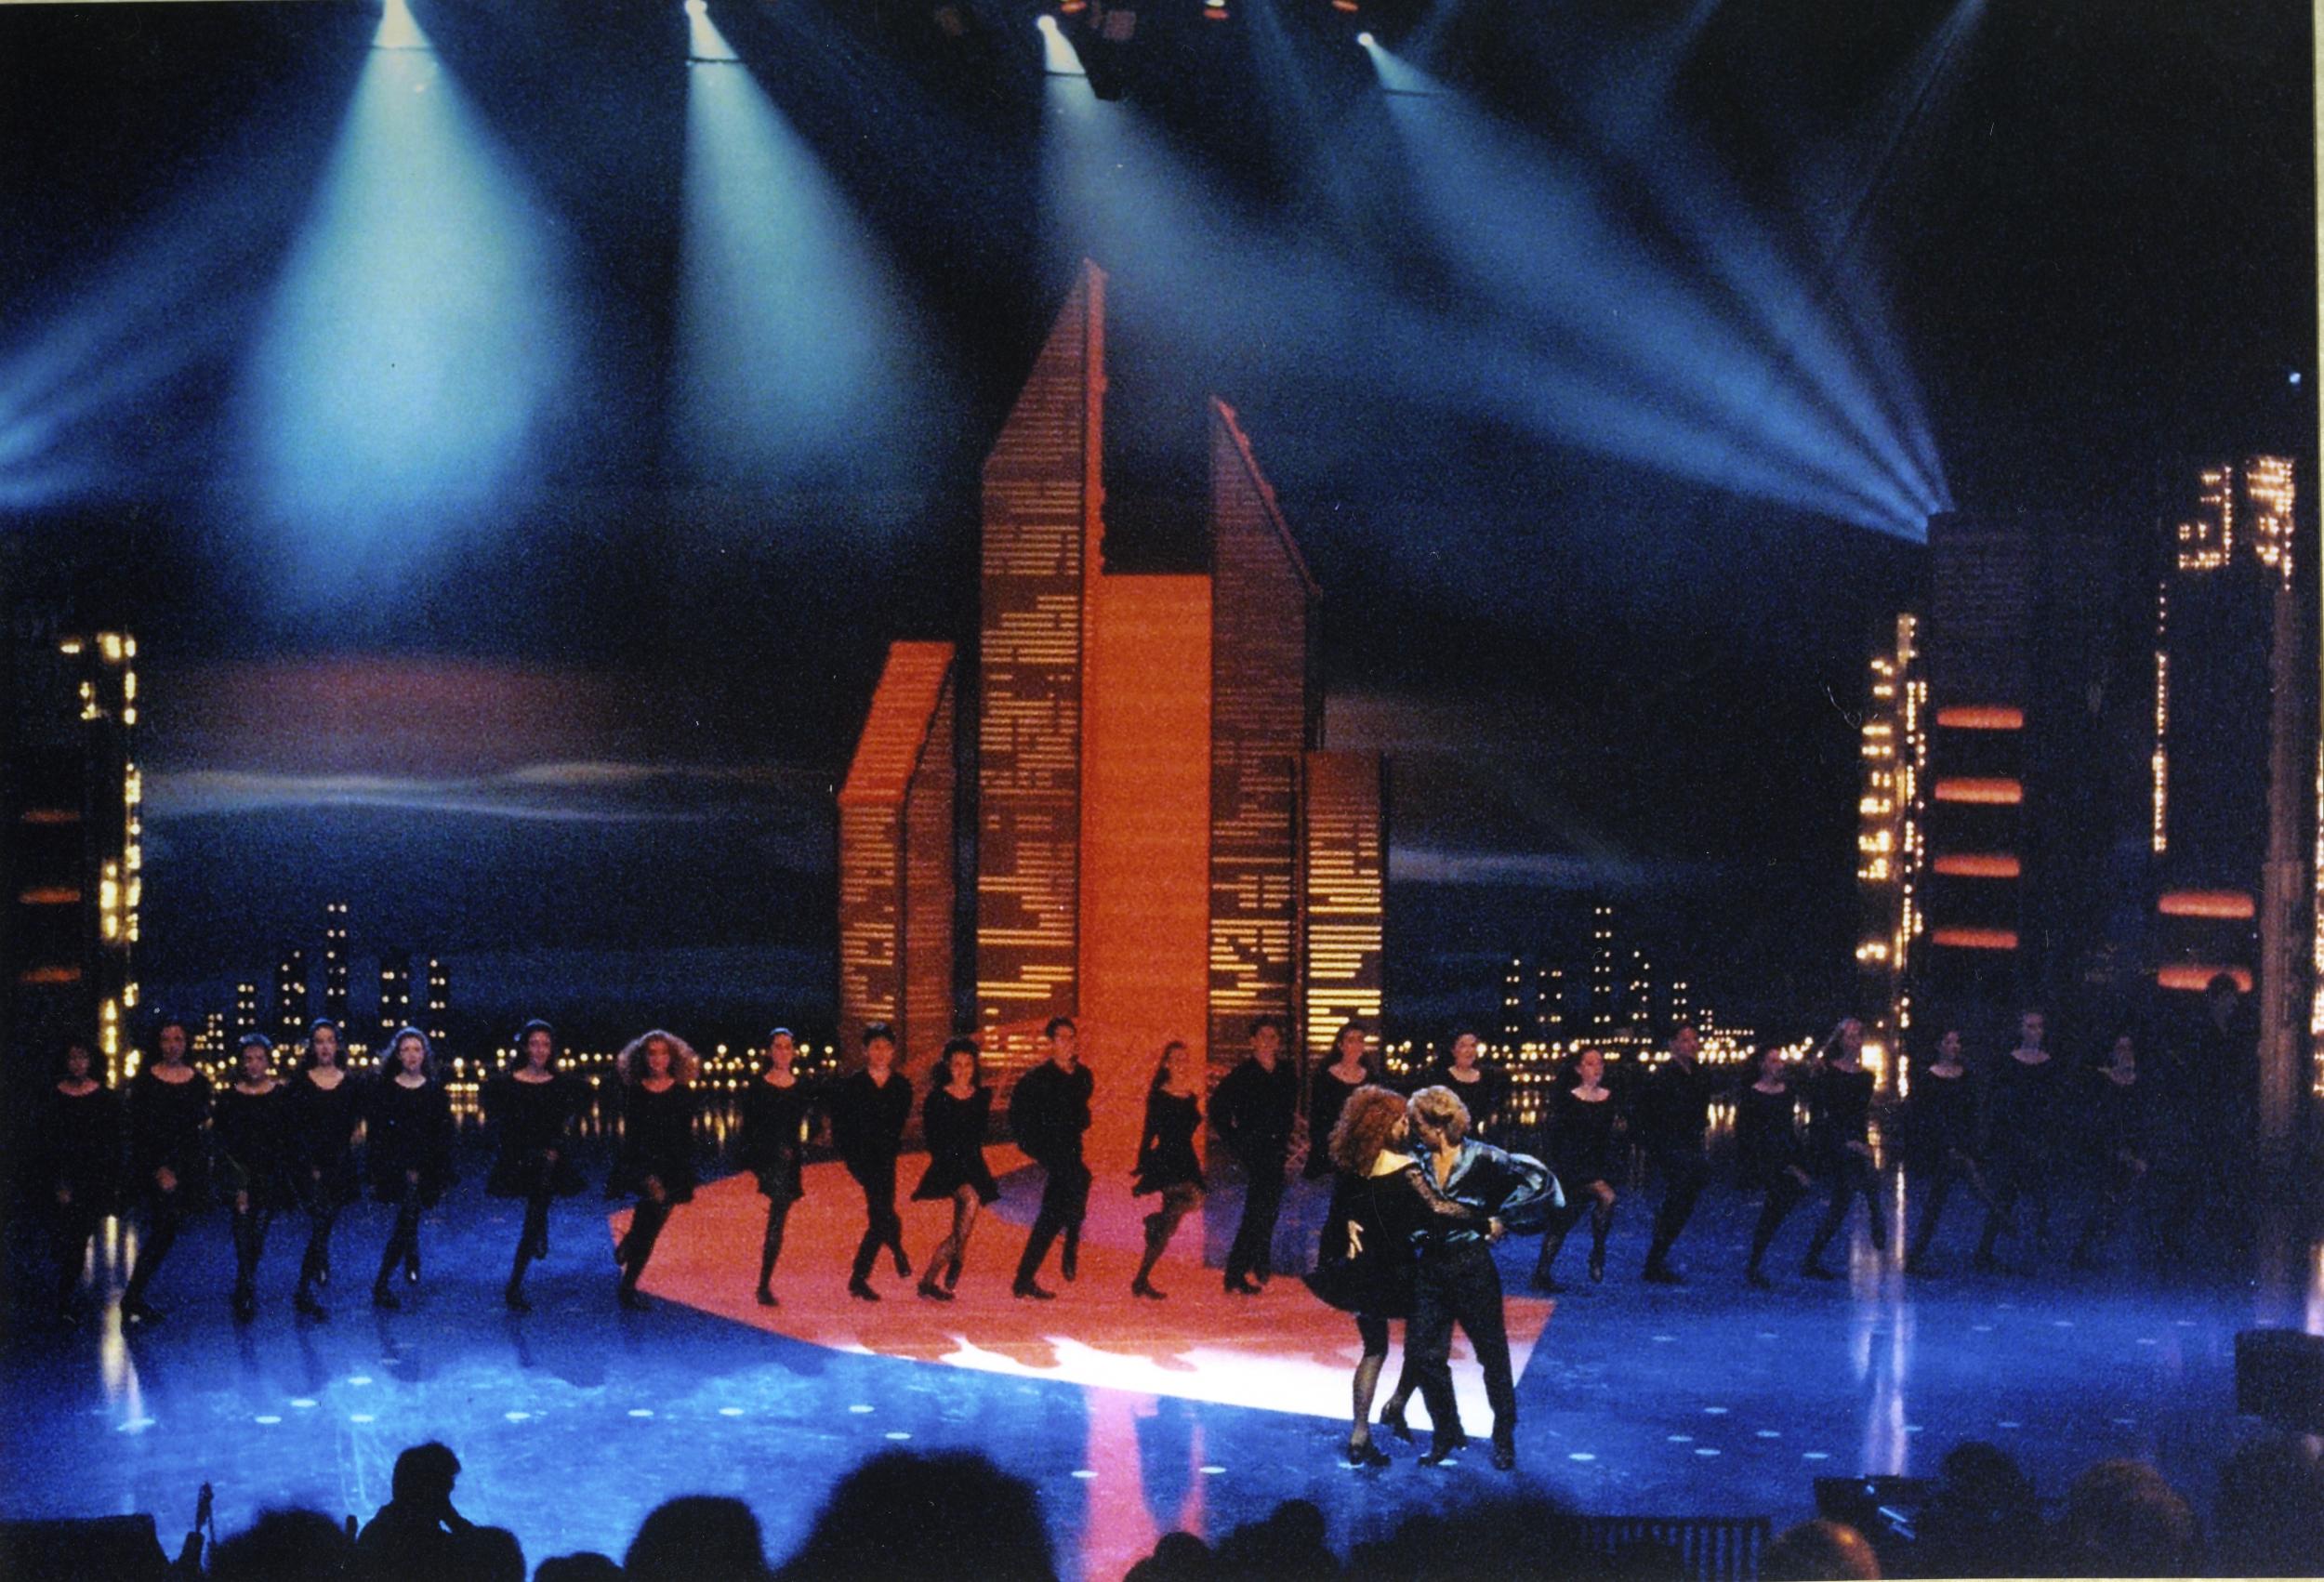 Riverdance at 25: How a Eurovision performance sparked an Irish cultural phenomenon